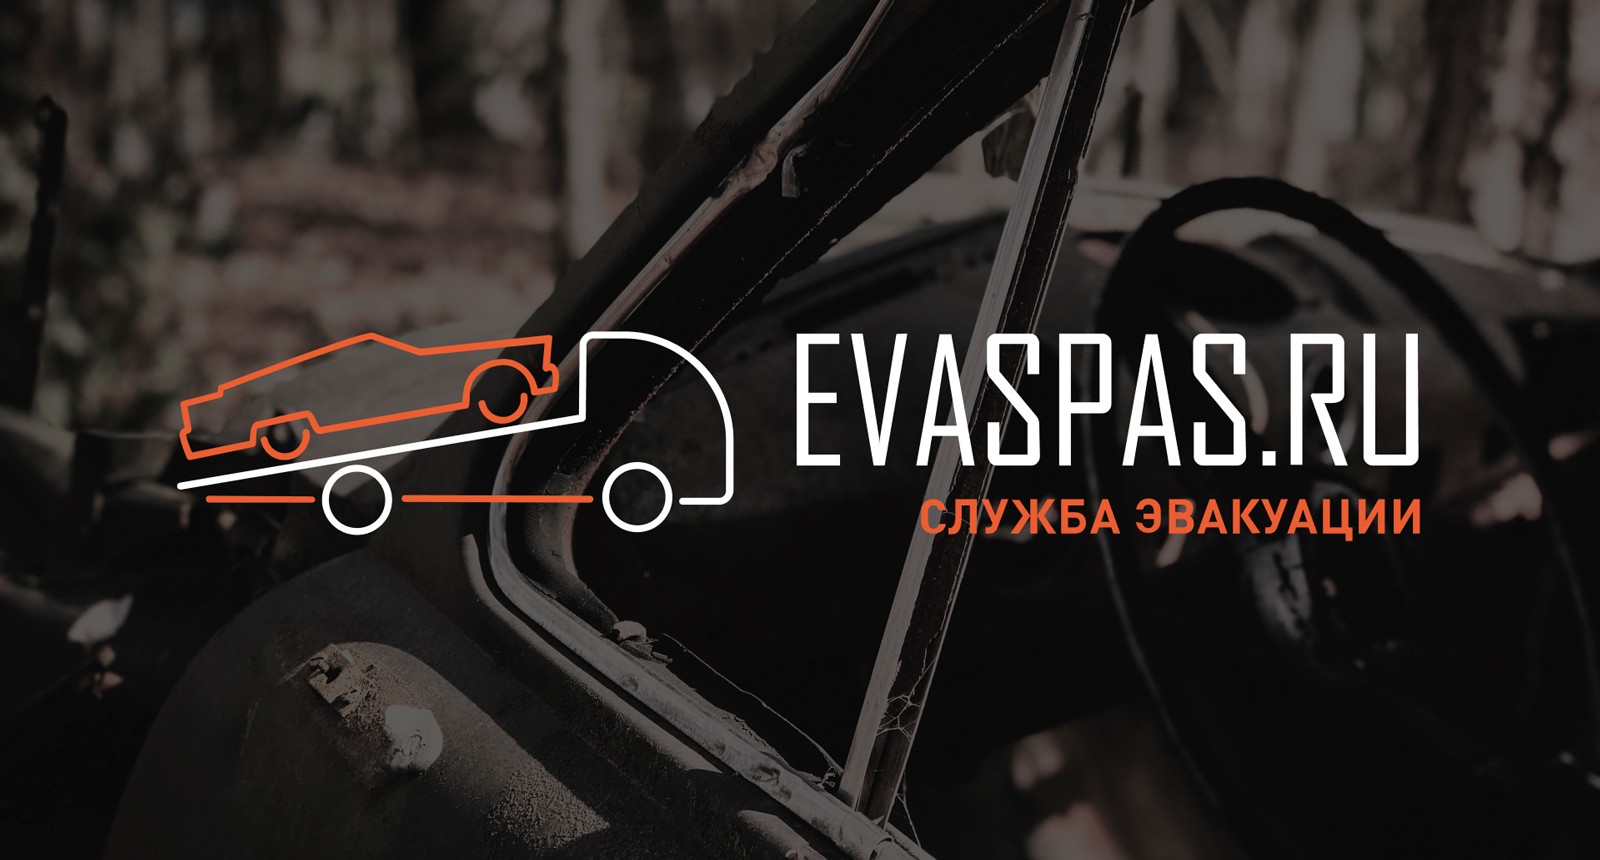 Evaspas.ru